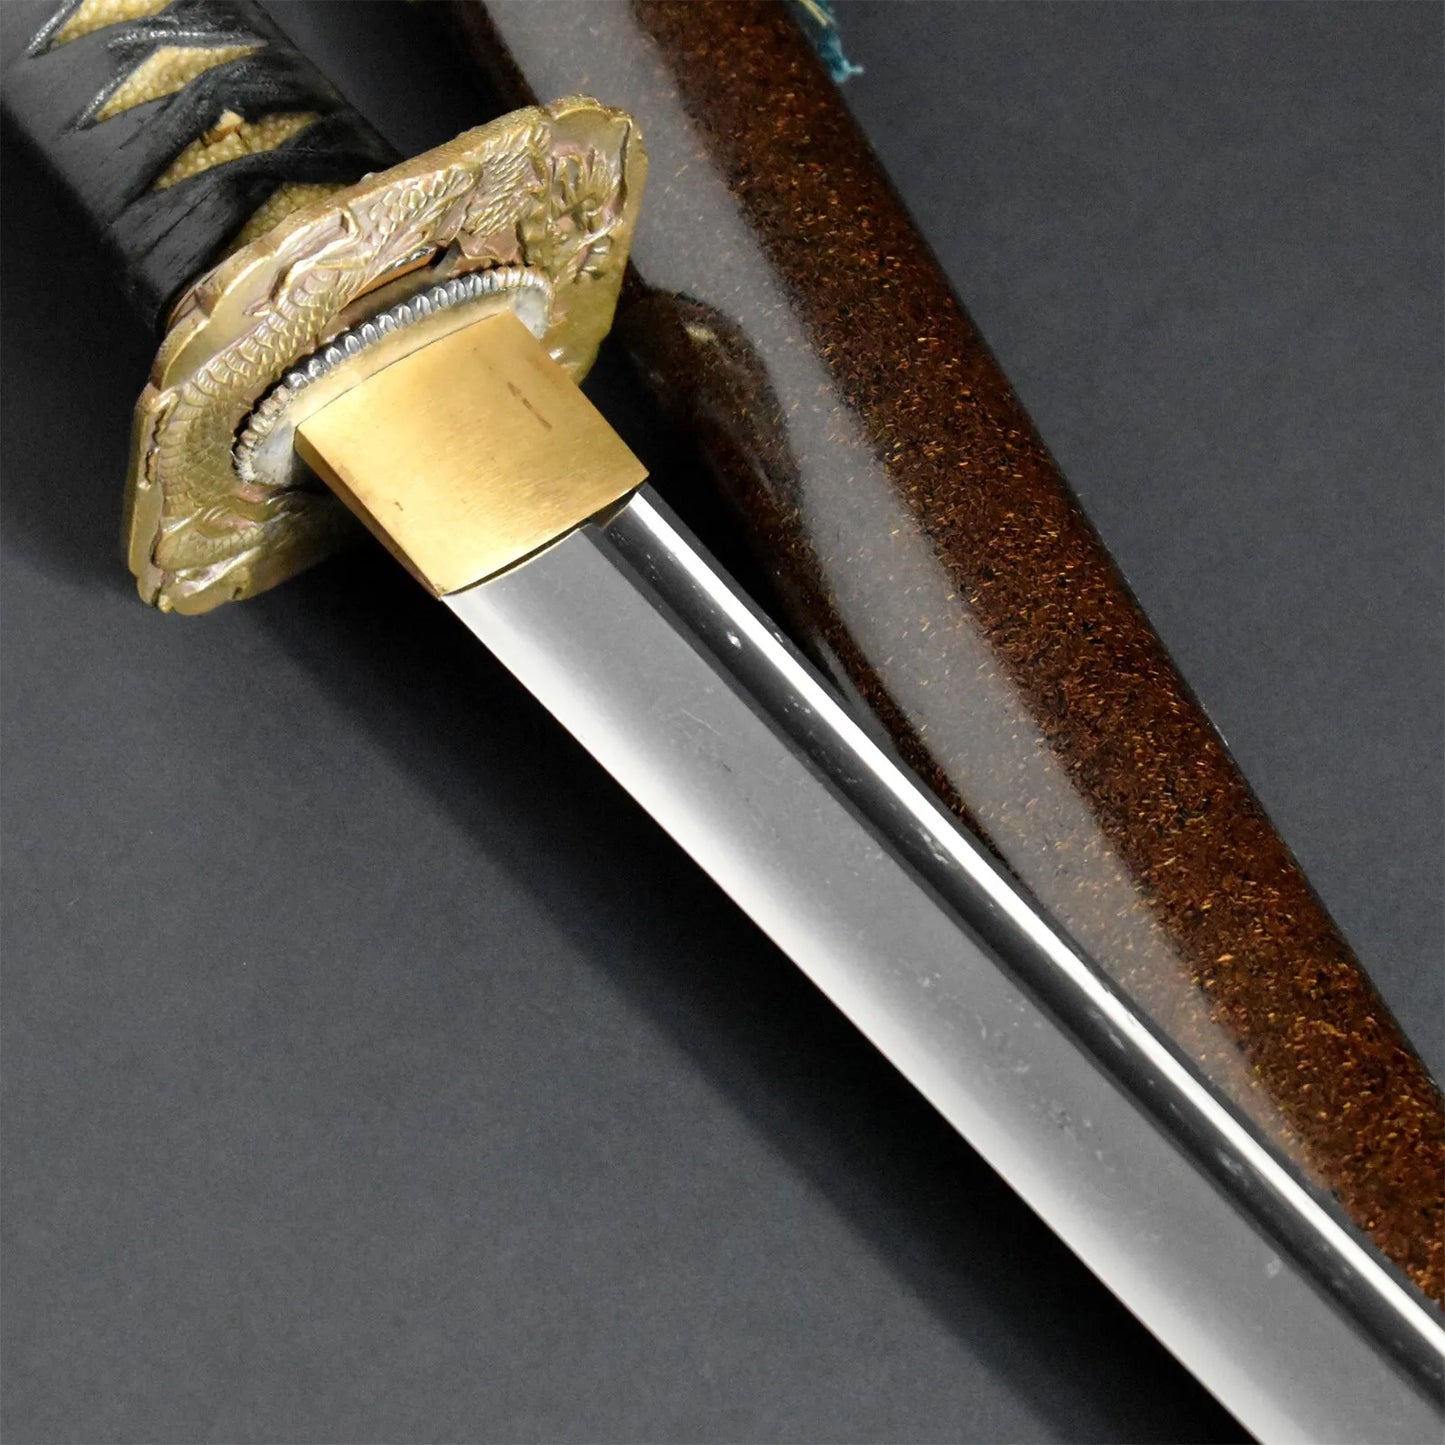 Exquisite Antique Japanese Long Sword Katana Nihonto Blade Collectible Samurai Weapon Unique.